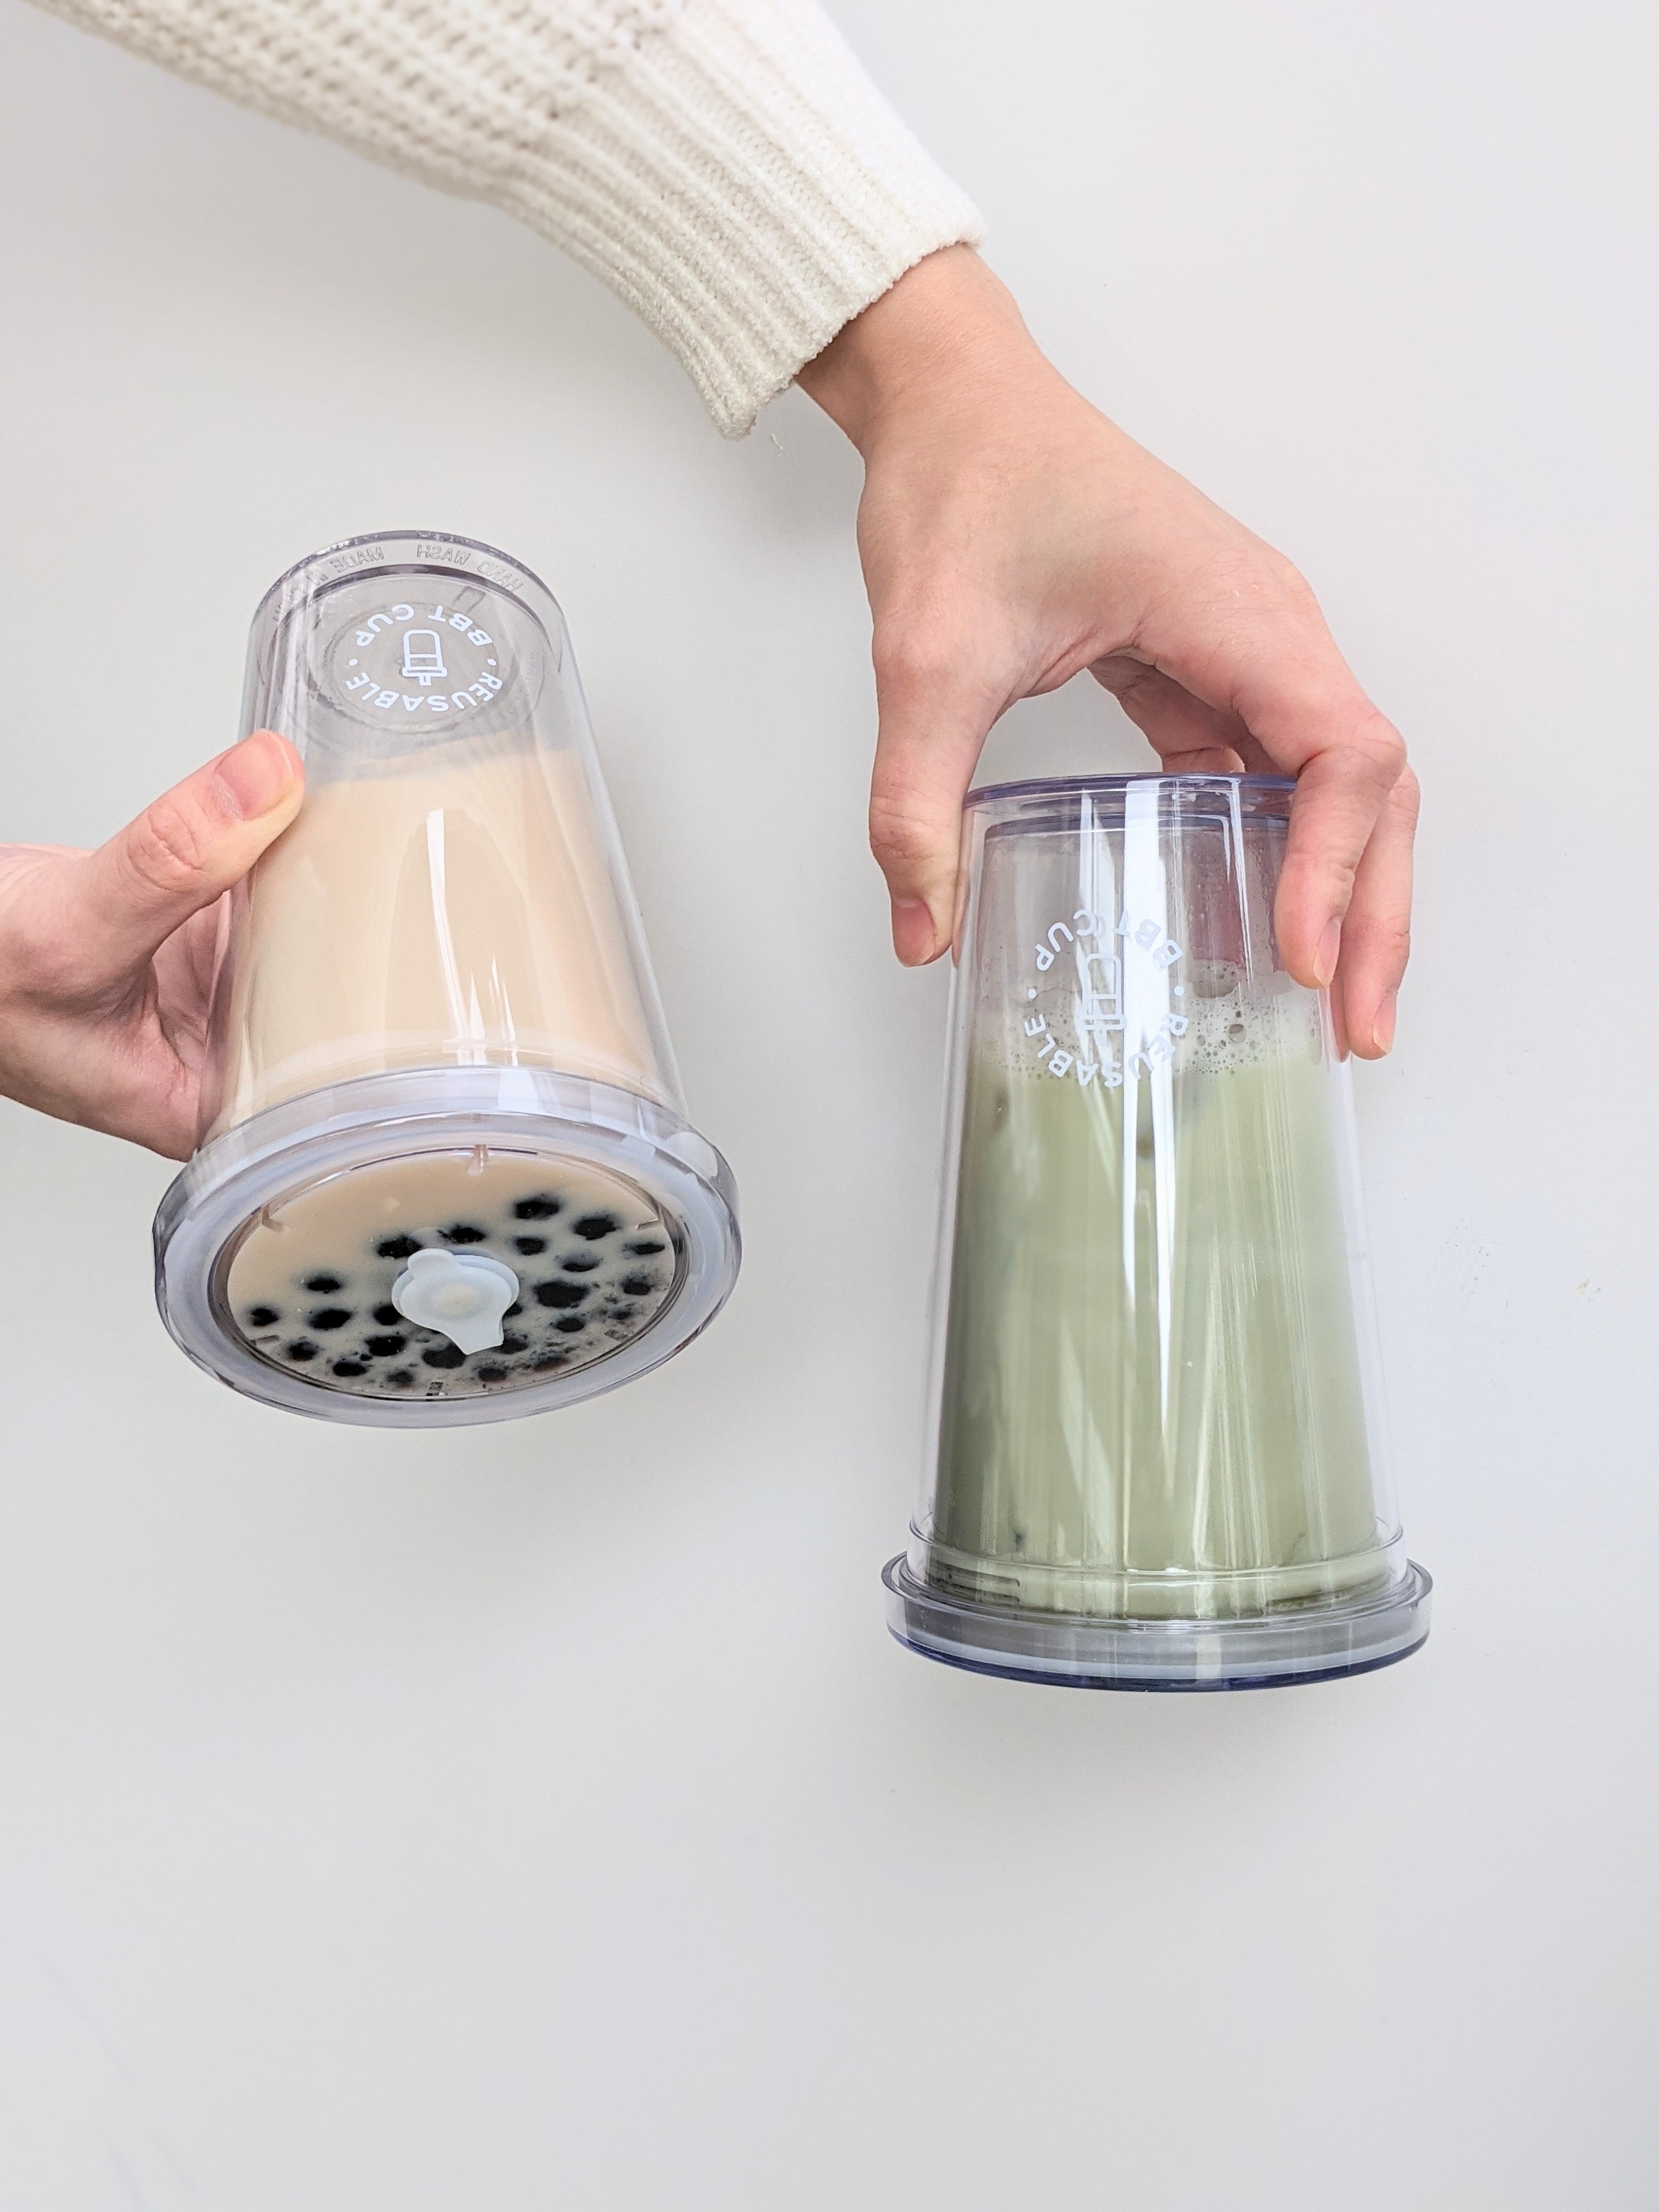 500ml Leak-Proof Insulated Reusable Bubble Tea Cup